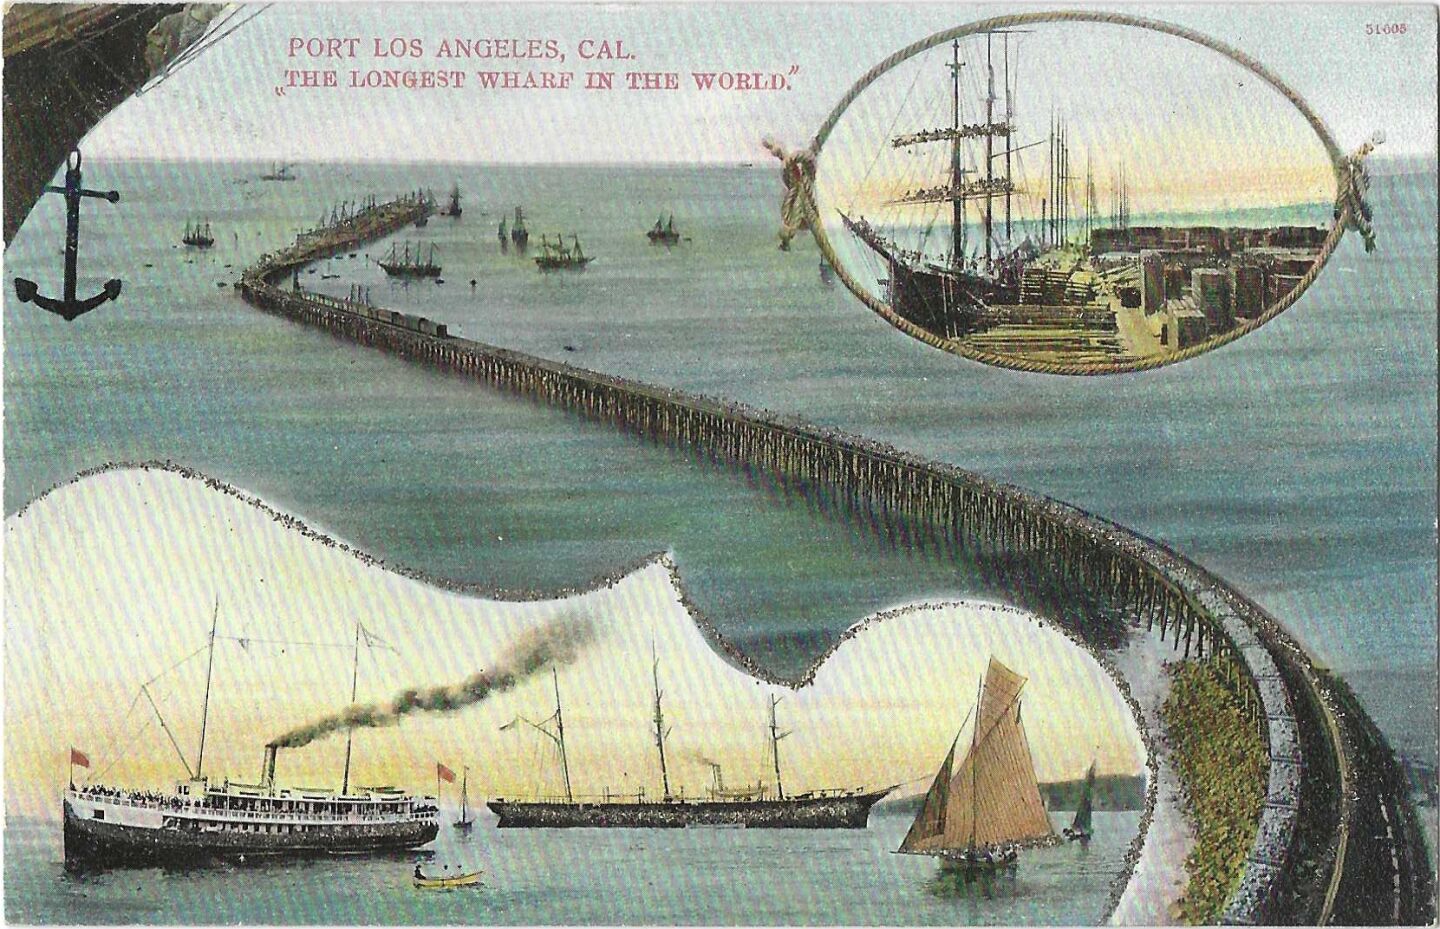 Ships anchor off the Long Wharf